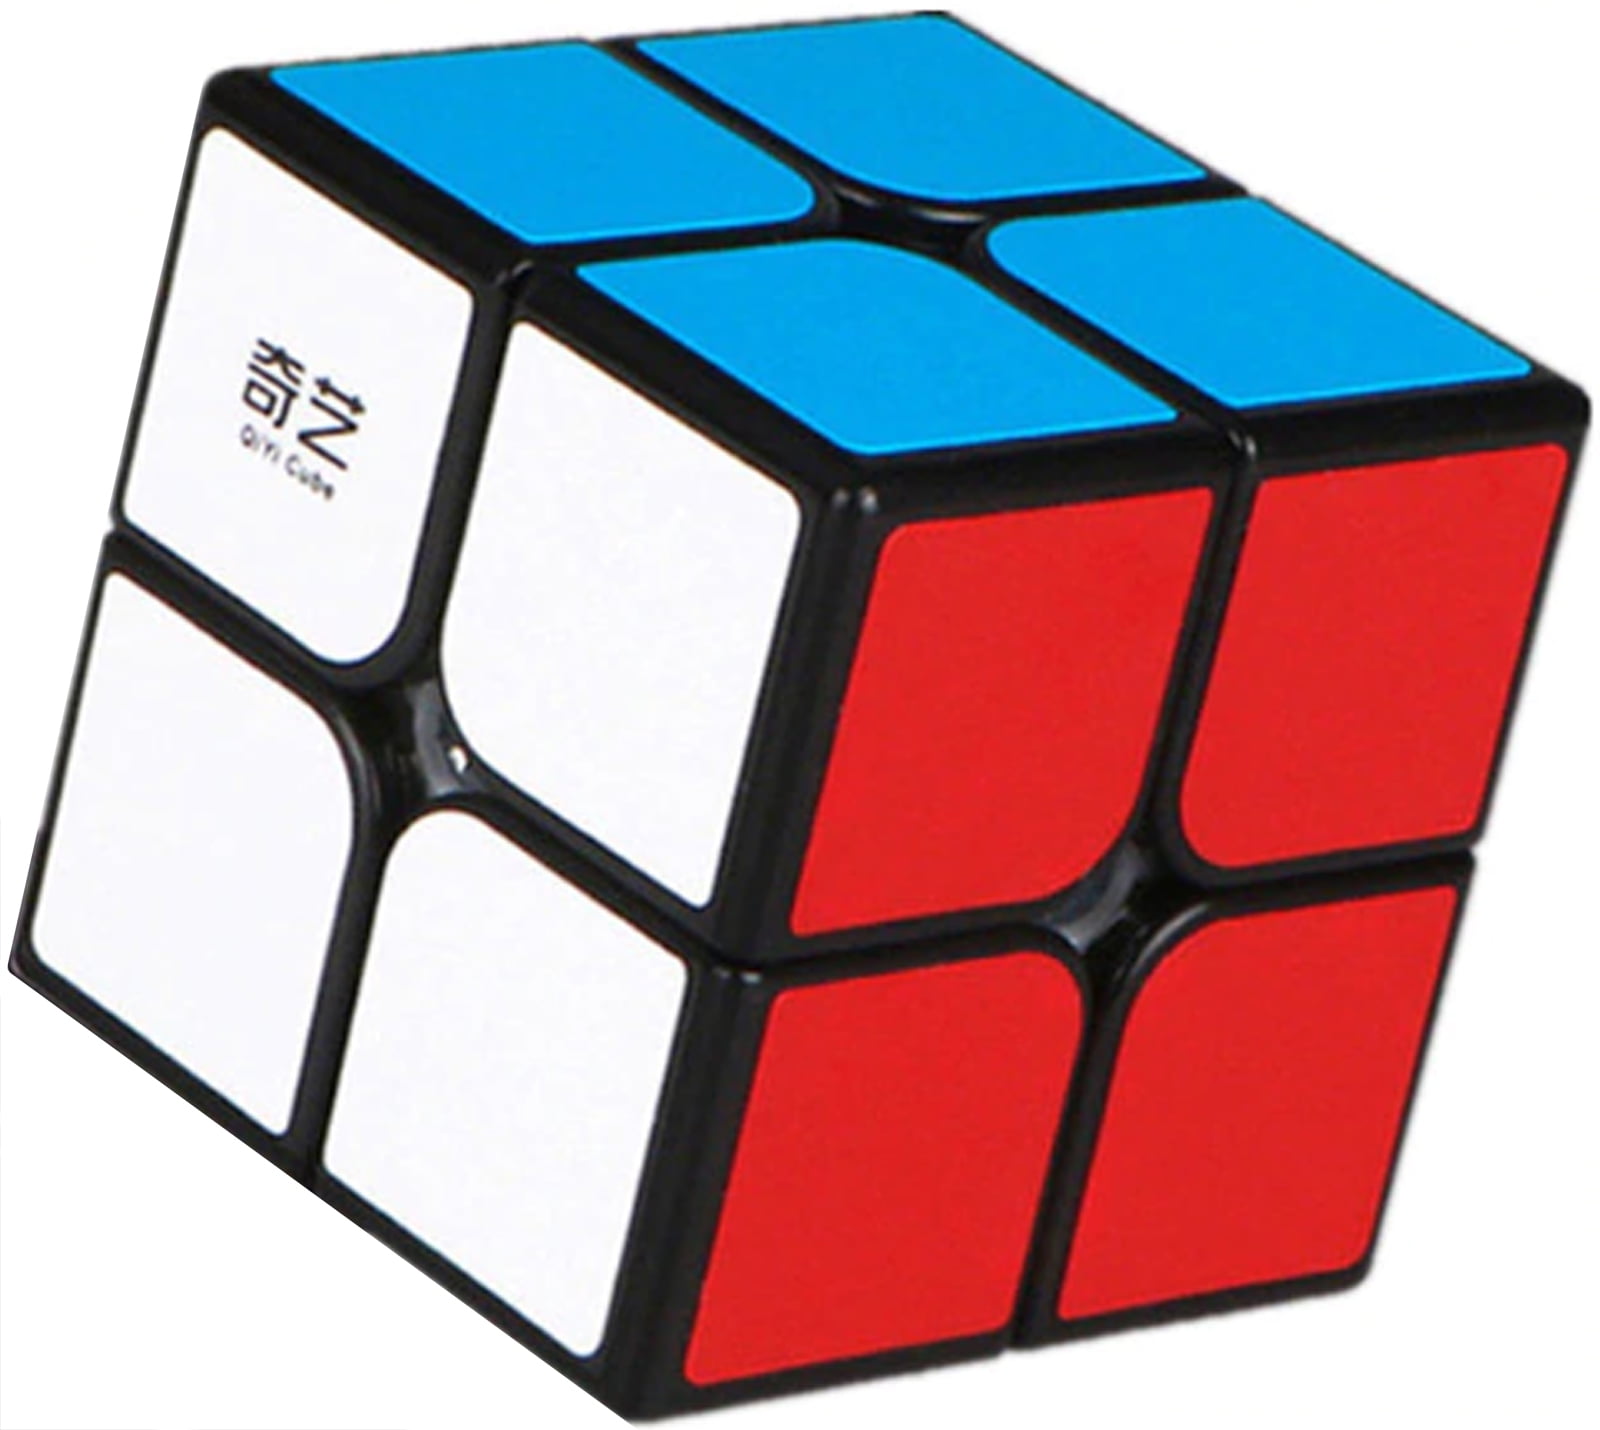 Qiyi Qidi S 2x2 Colorful Stickerless Magic Cube Brain Teasers Twist Toy Puzzles 